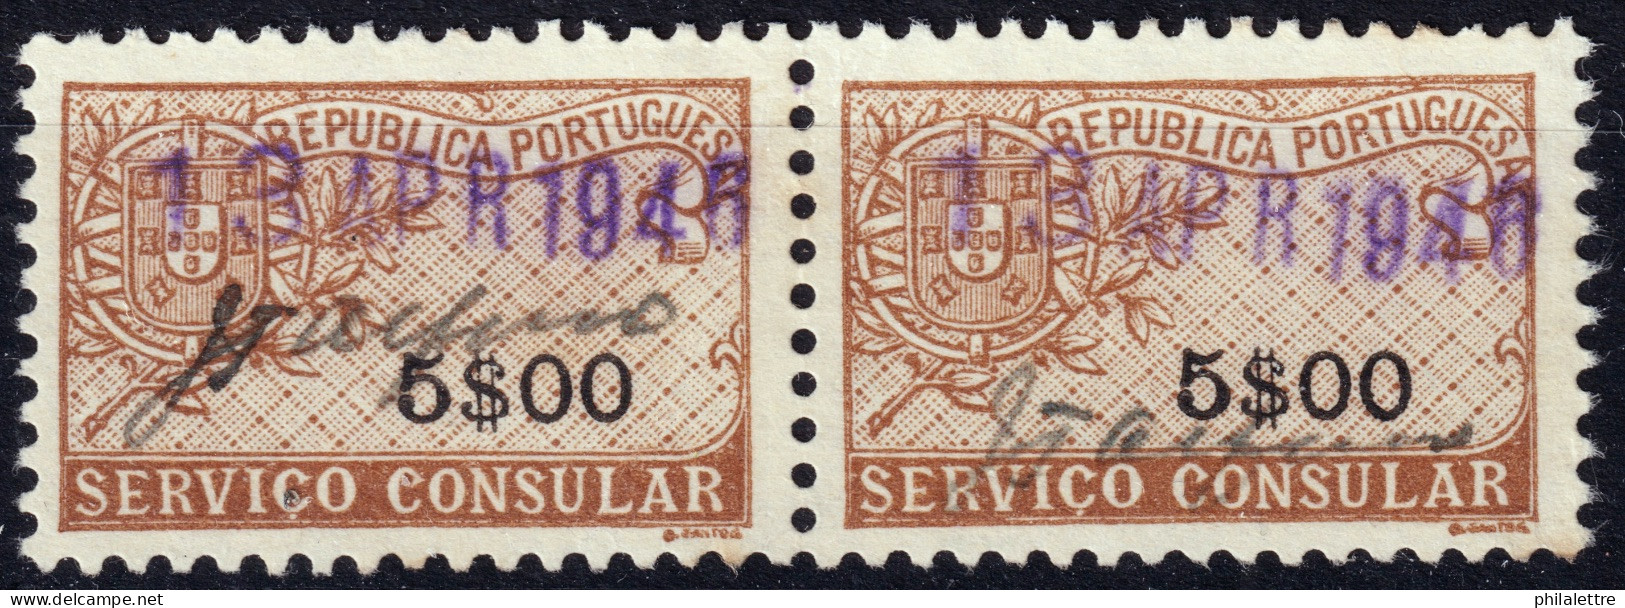 PORTUGAL - 1946 Pair Of 5.00esc. "SERVICIO CONSULAR" Fiscal Revenue Stamp - Very Fine Used - Usati